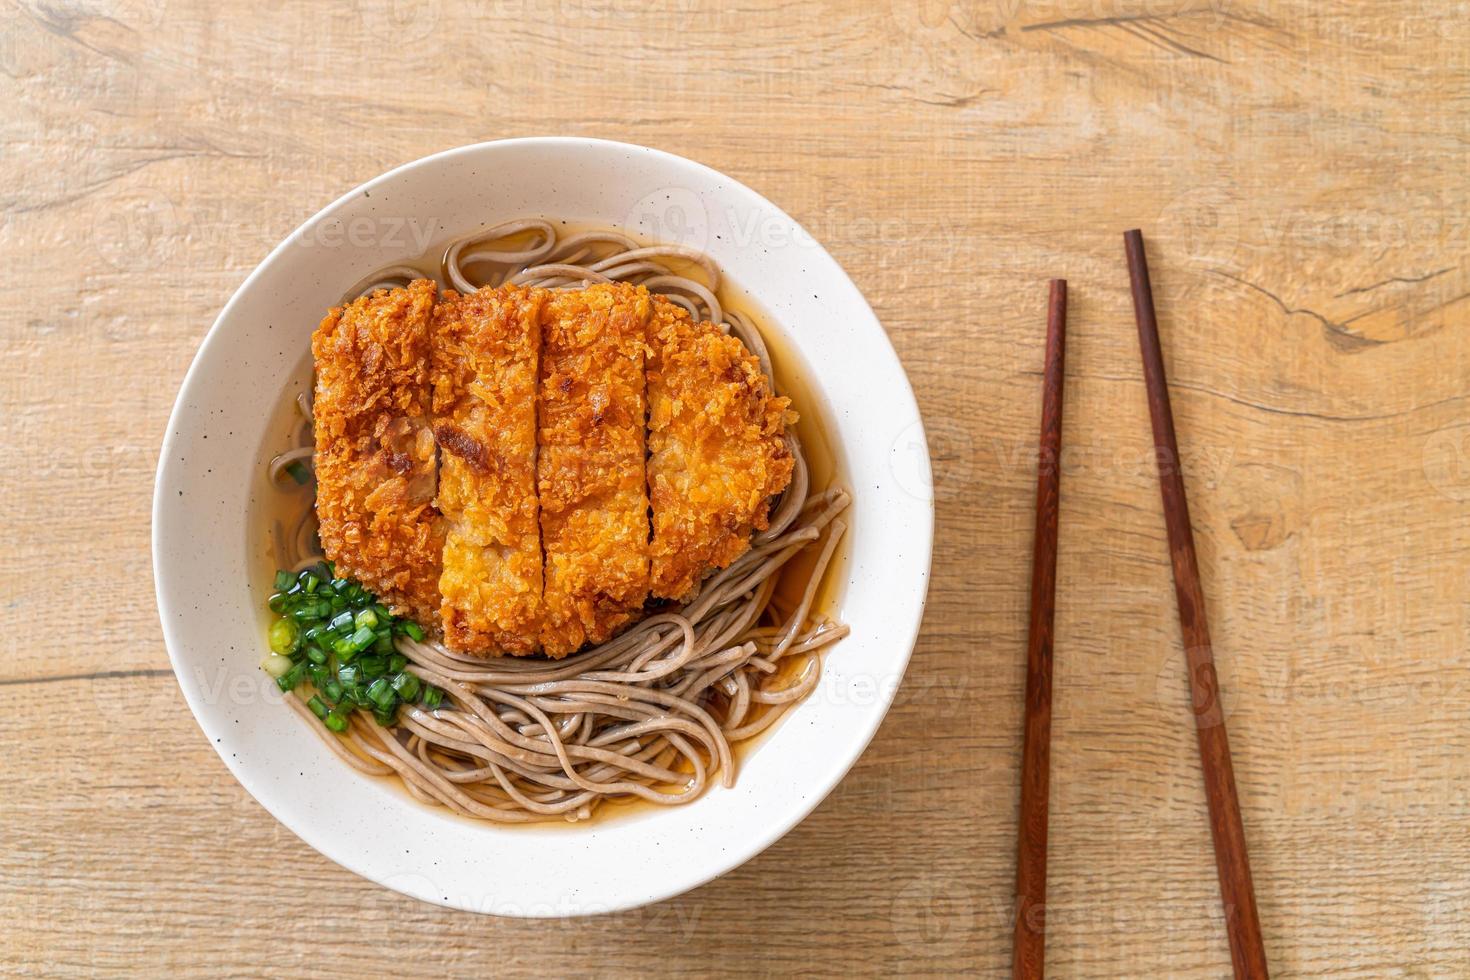 Soba ramen noodle with Japanese fried pork cutlet photo